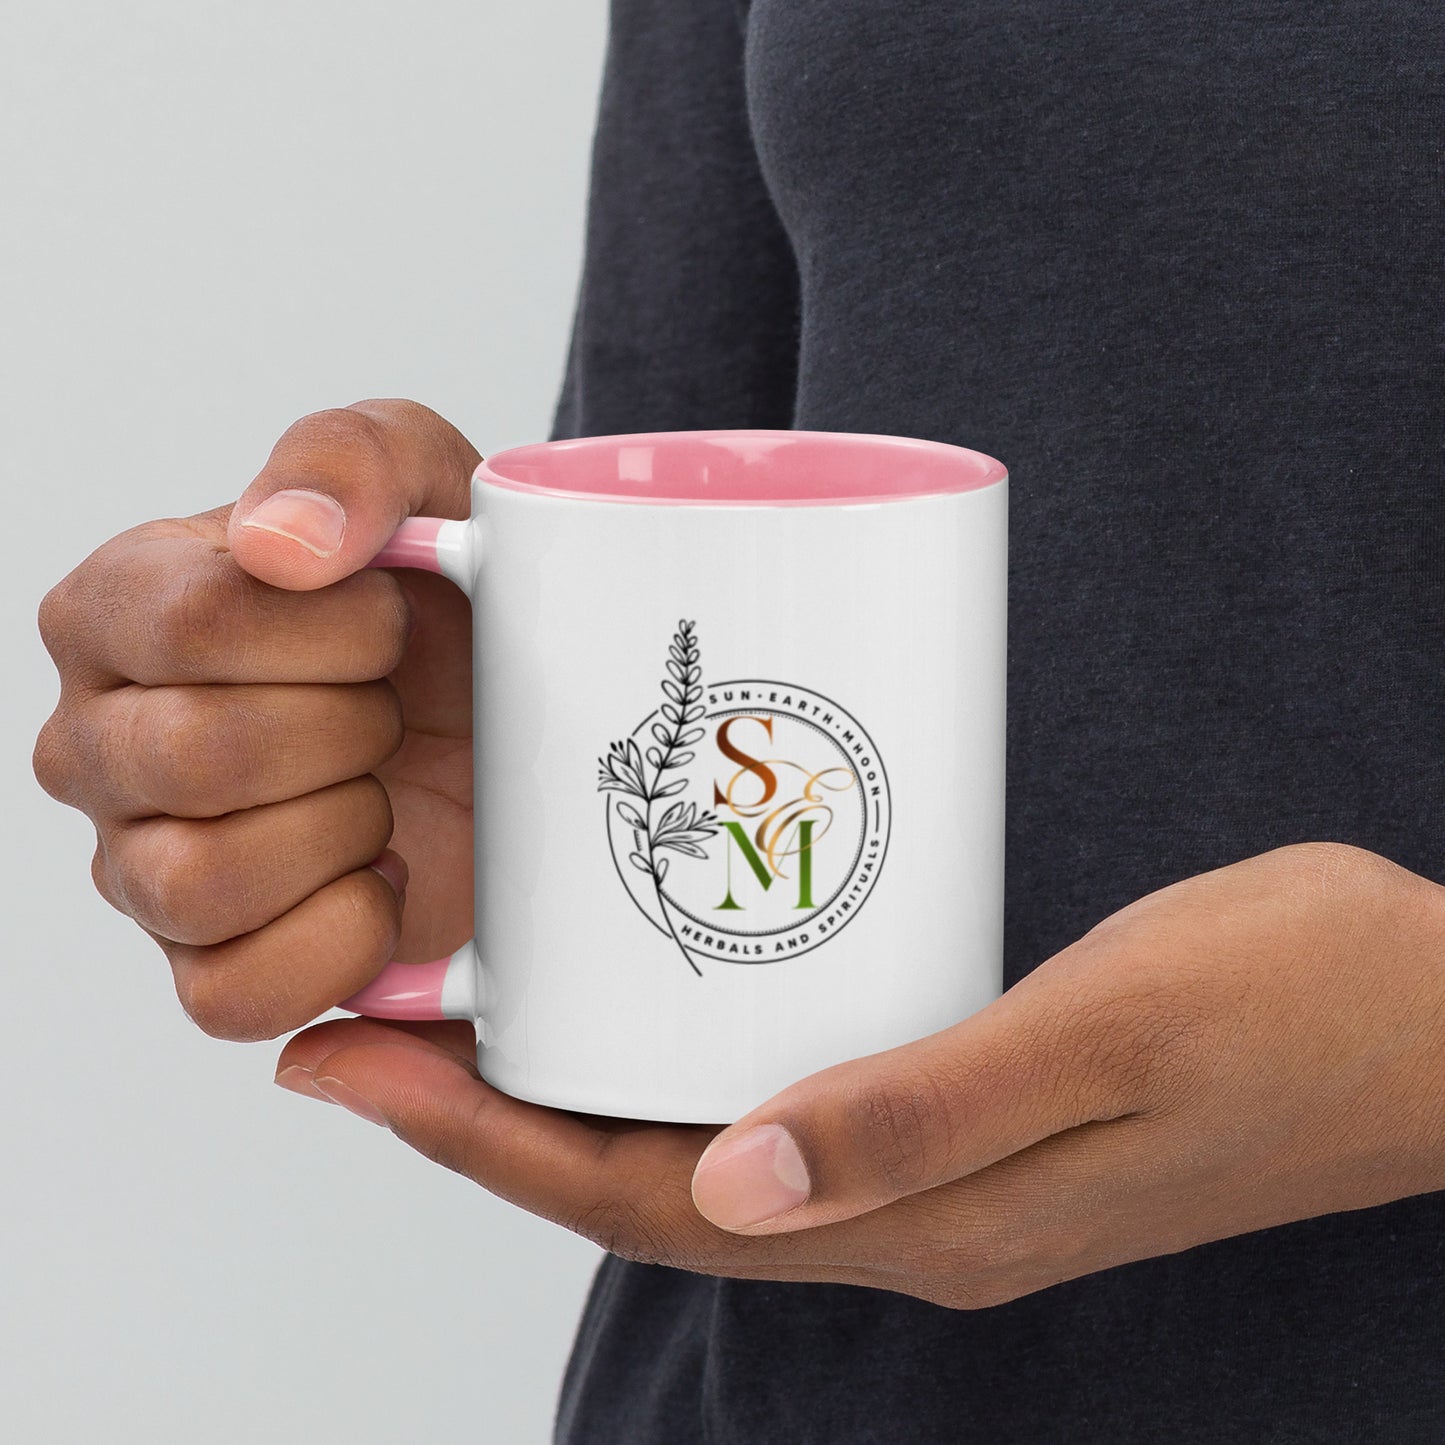 BREW Tea Mug with Color Inside